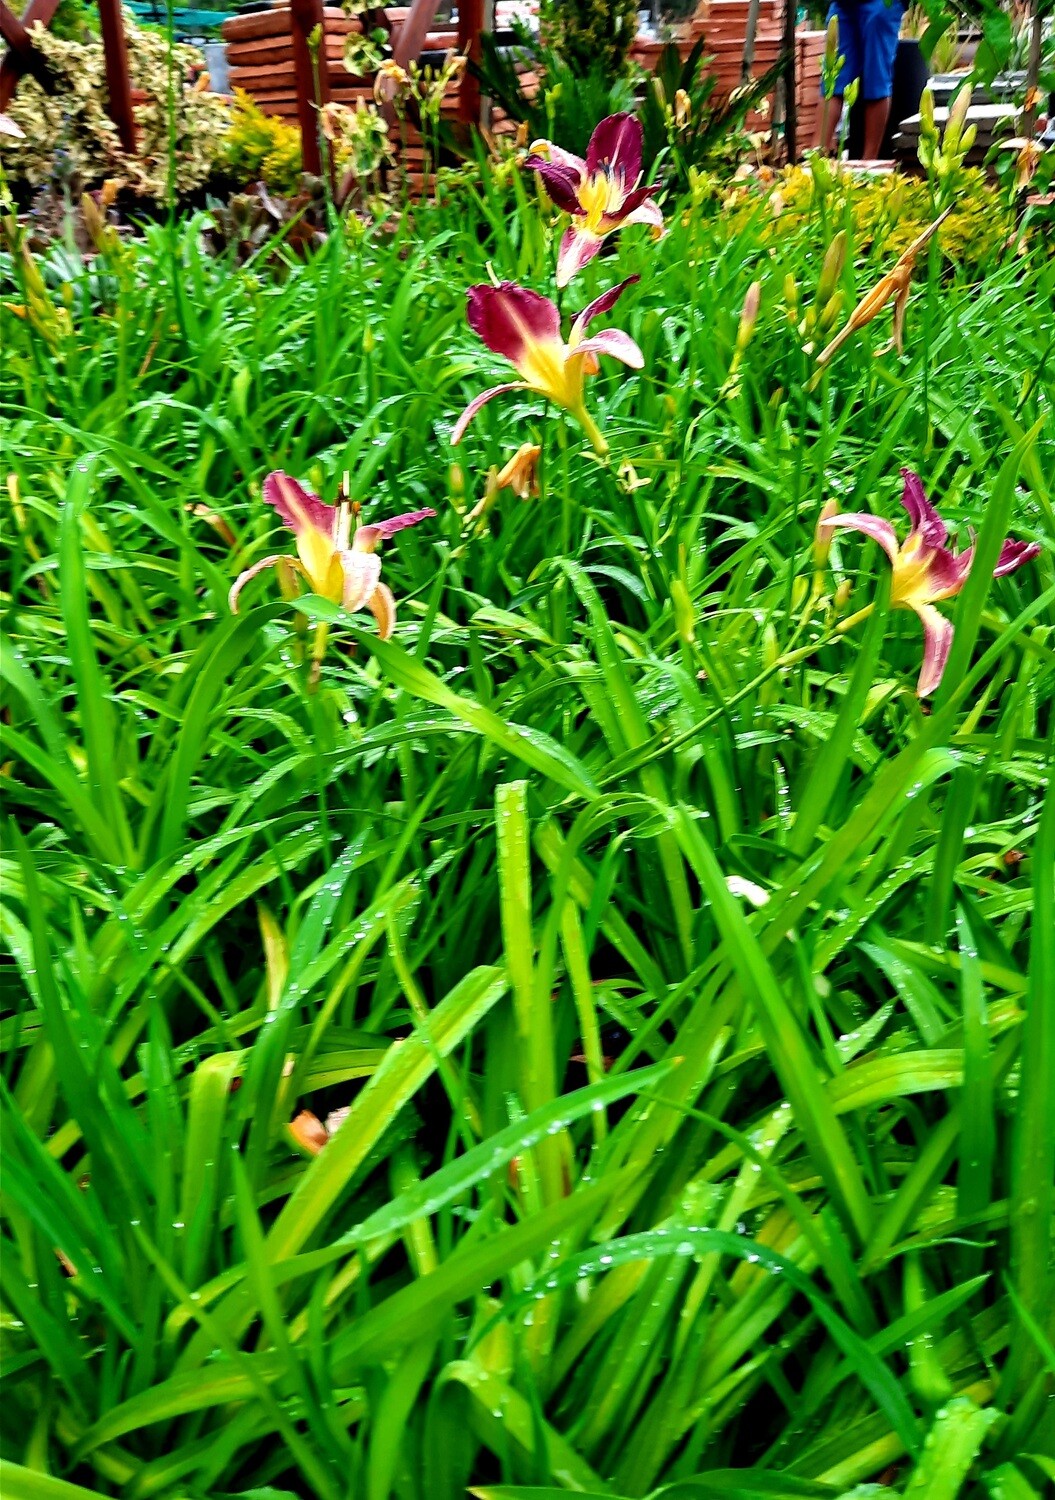 Hemerocallis Day Lillies 4L - Landscaping Mix, mainly orange and dark maroon